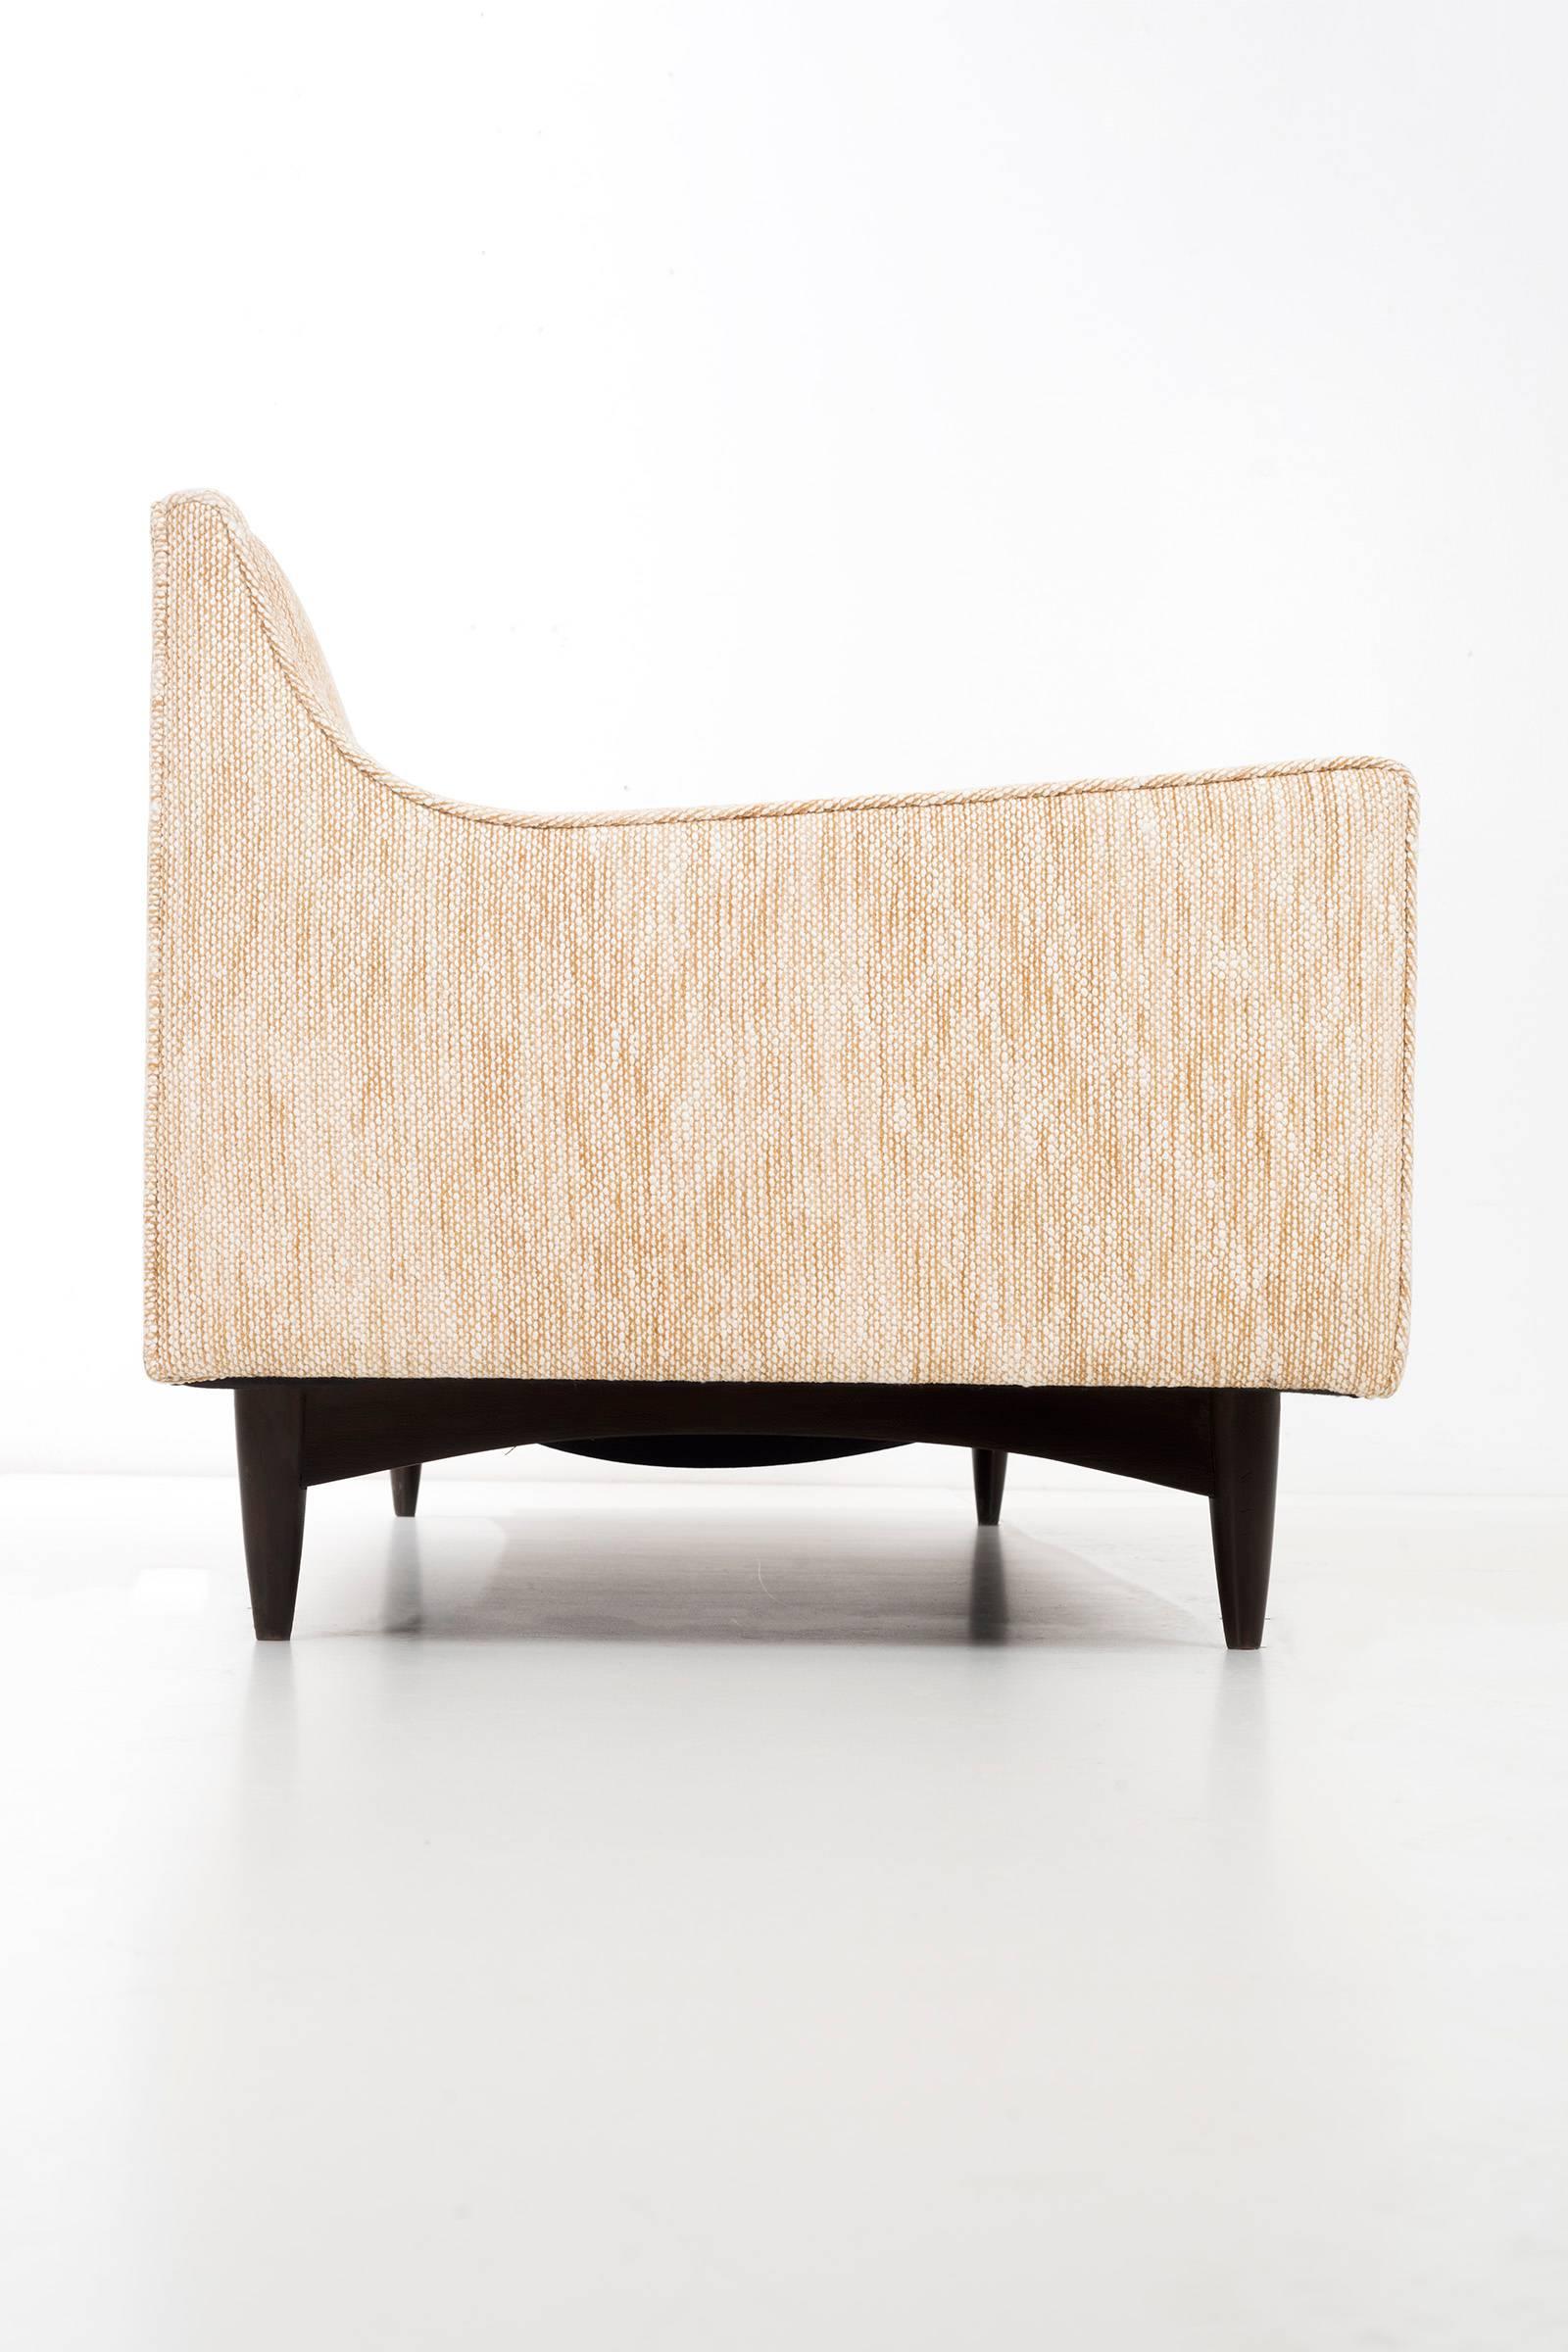 Mid-20th Century Woven Sofa in the Style of Borsani